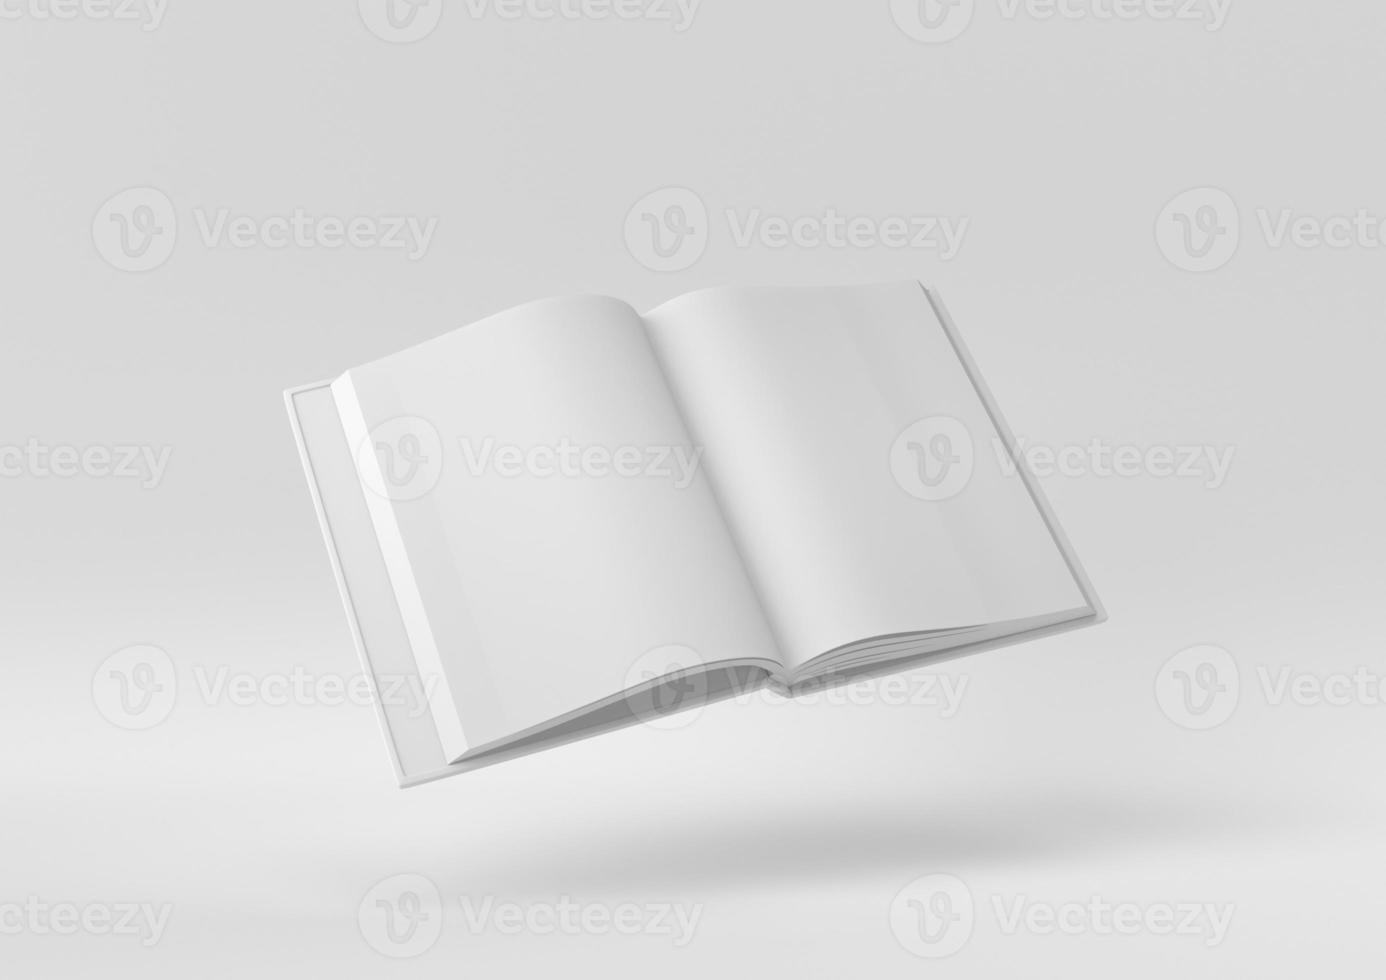 vit tom öppen tidning eller bok flytande i vit bakgrund. minimal konceptidé kreativ. svartvit. 3d rendering. foto